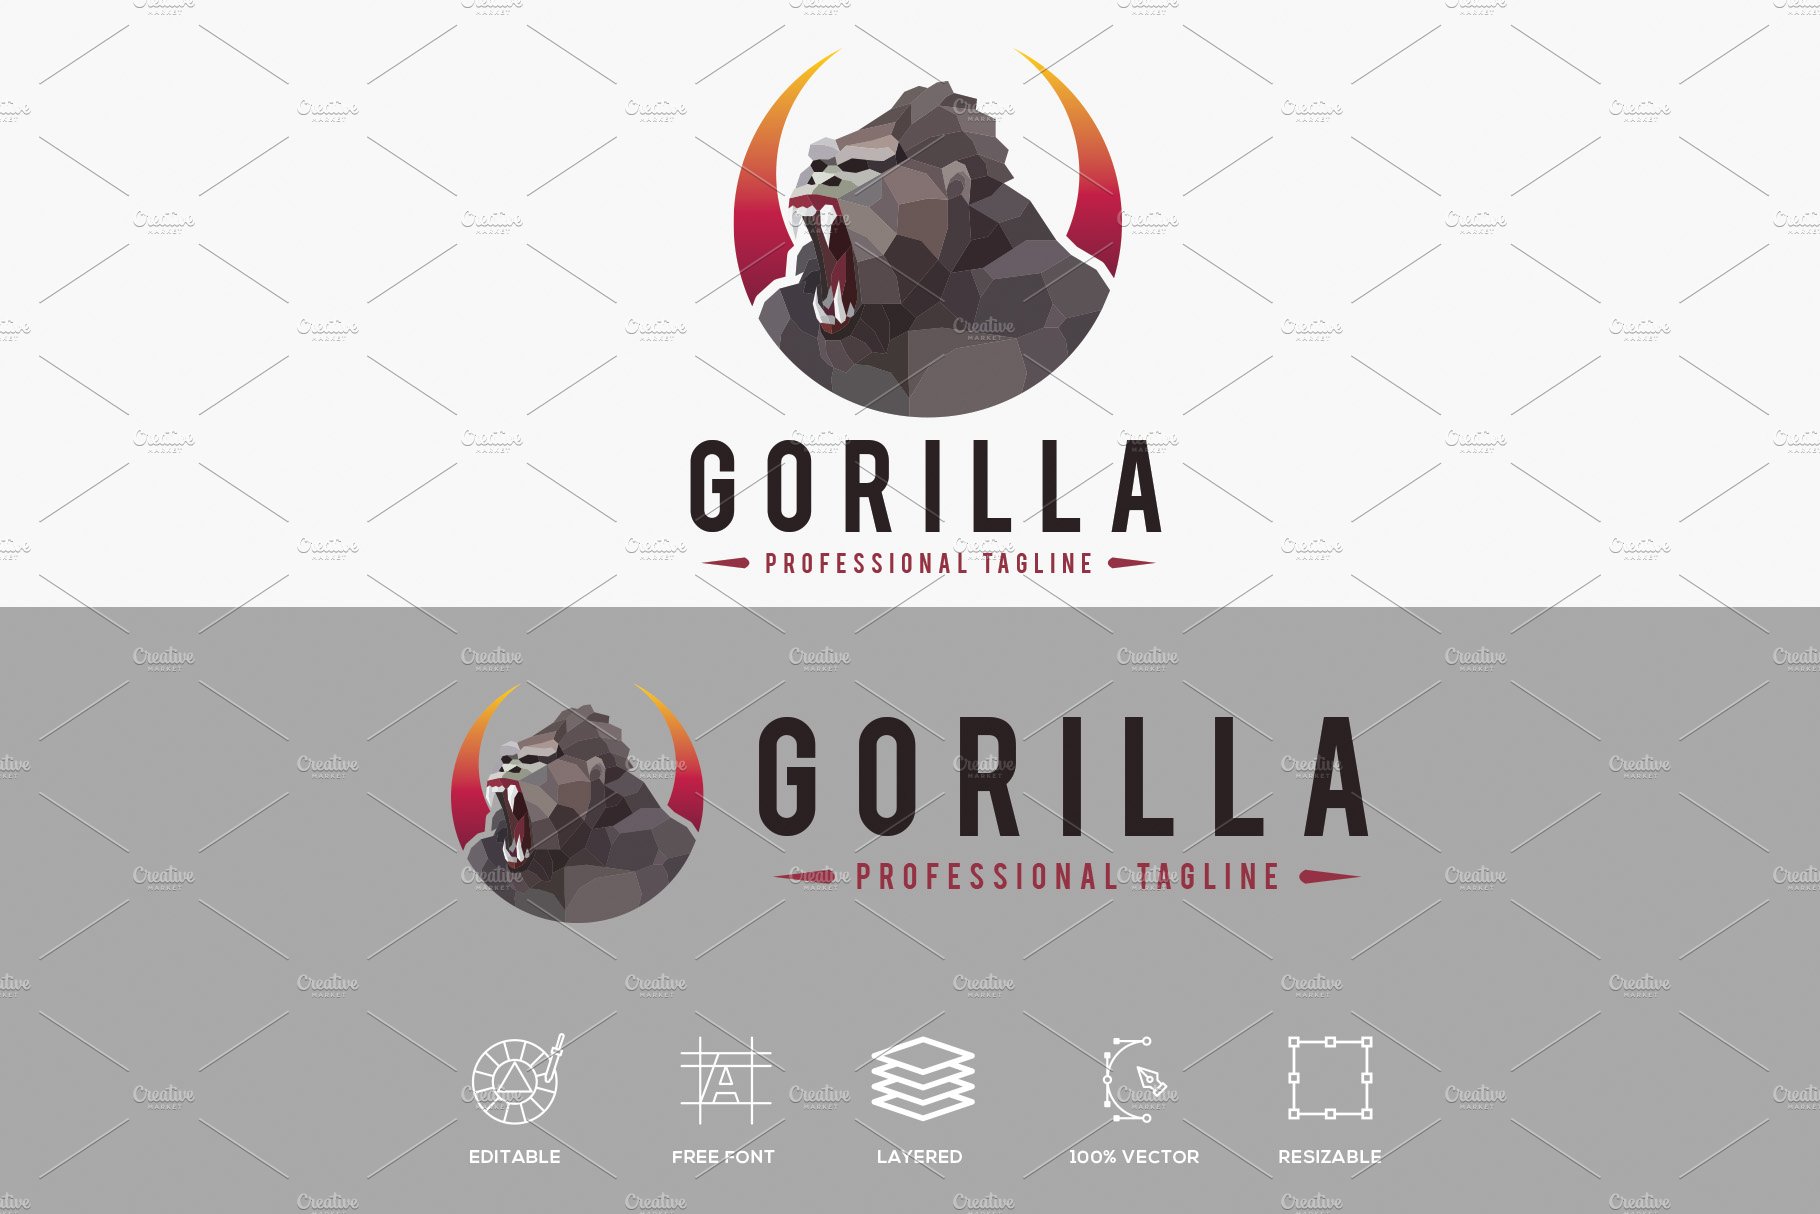 Gorilla Polygonal Logo cover image.